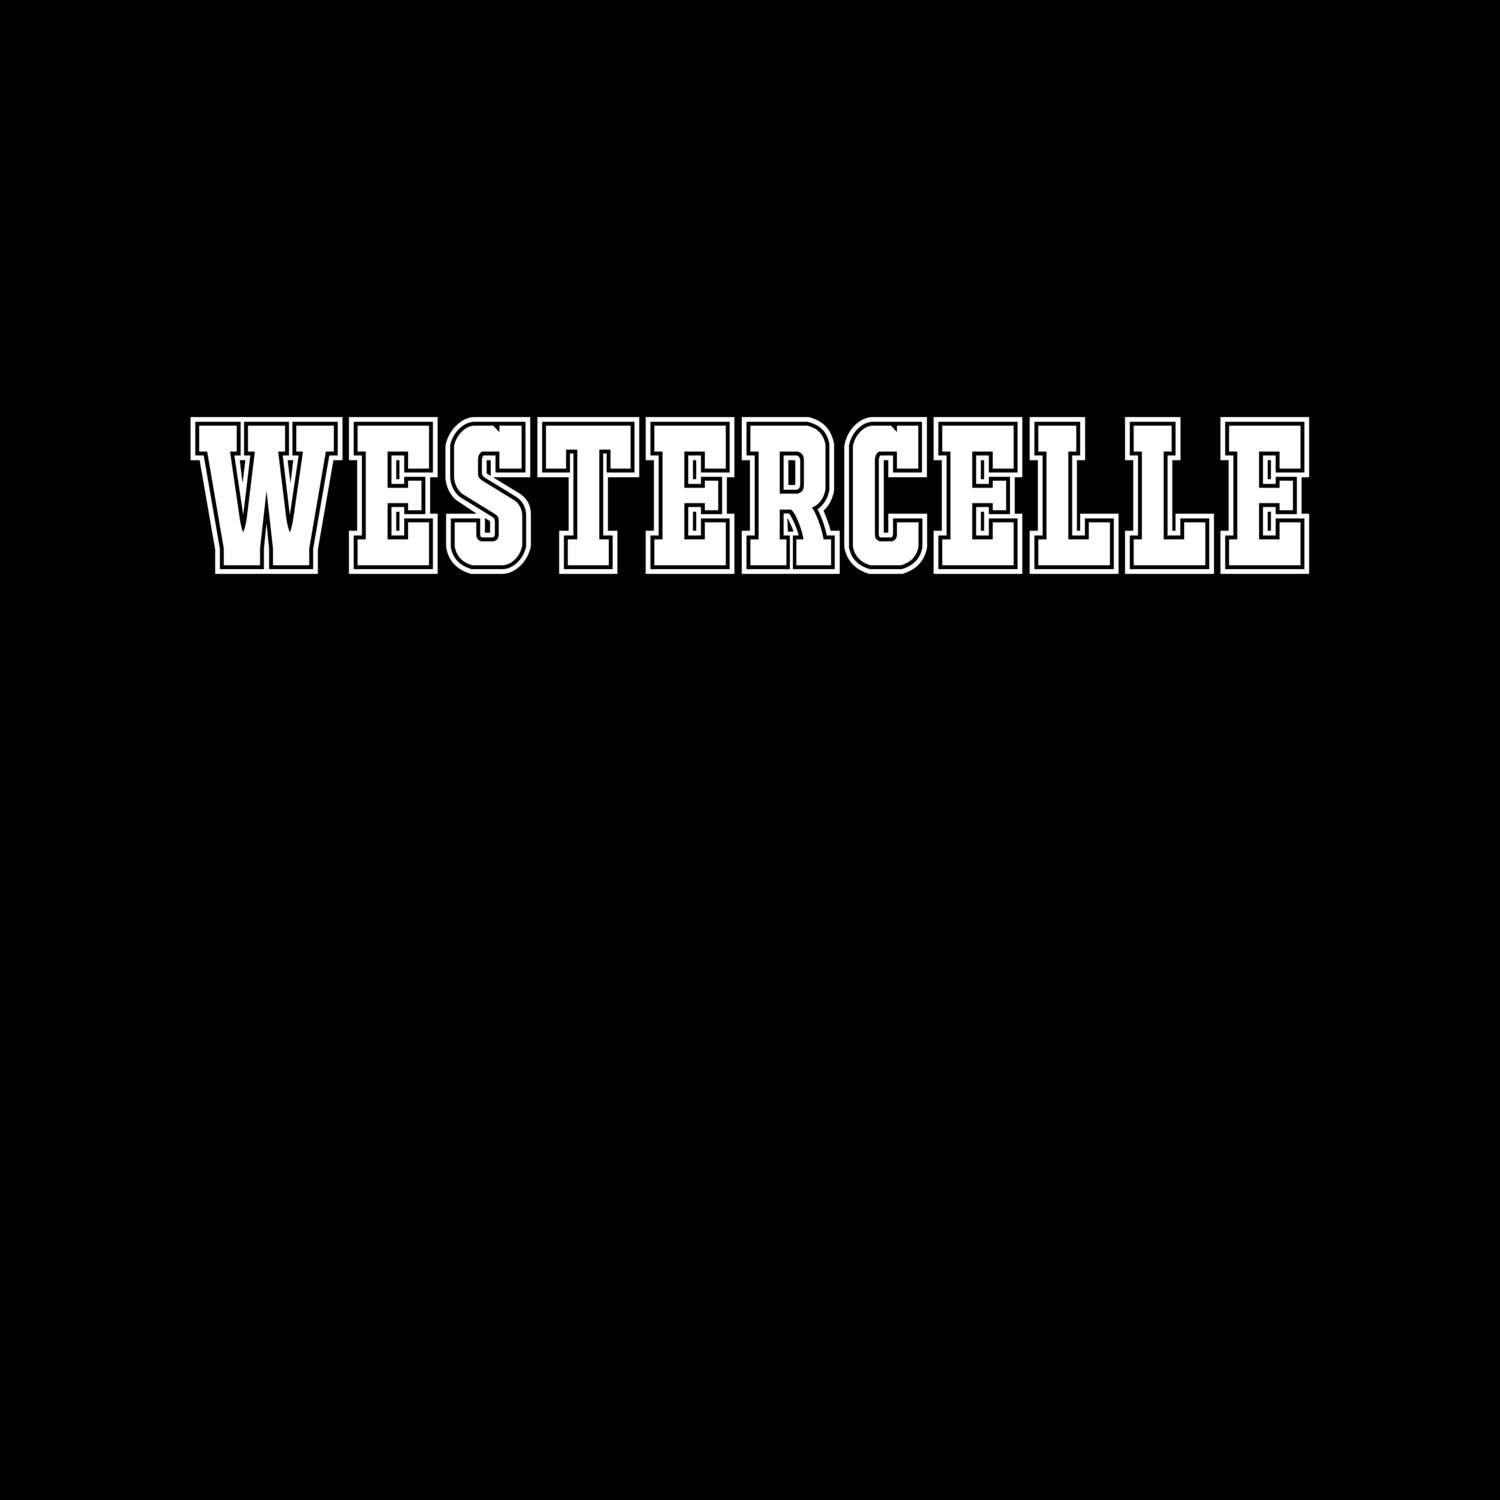 Westercelle T-Shirt »Classic«